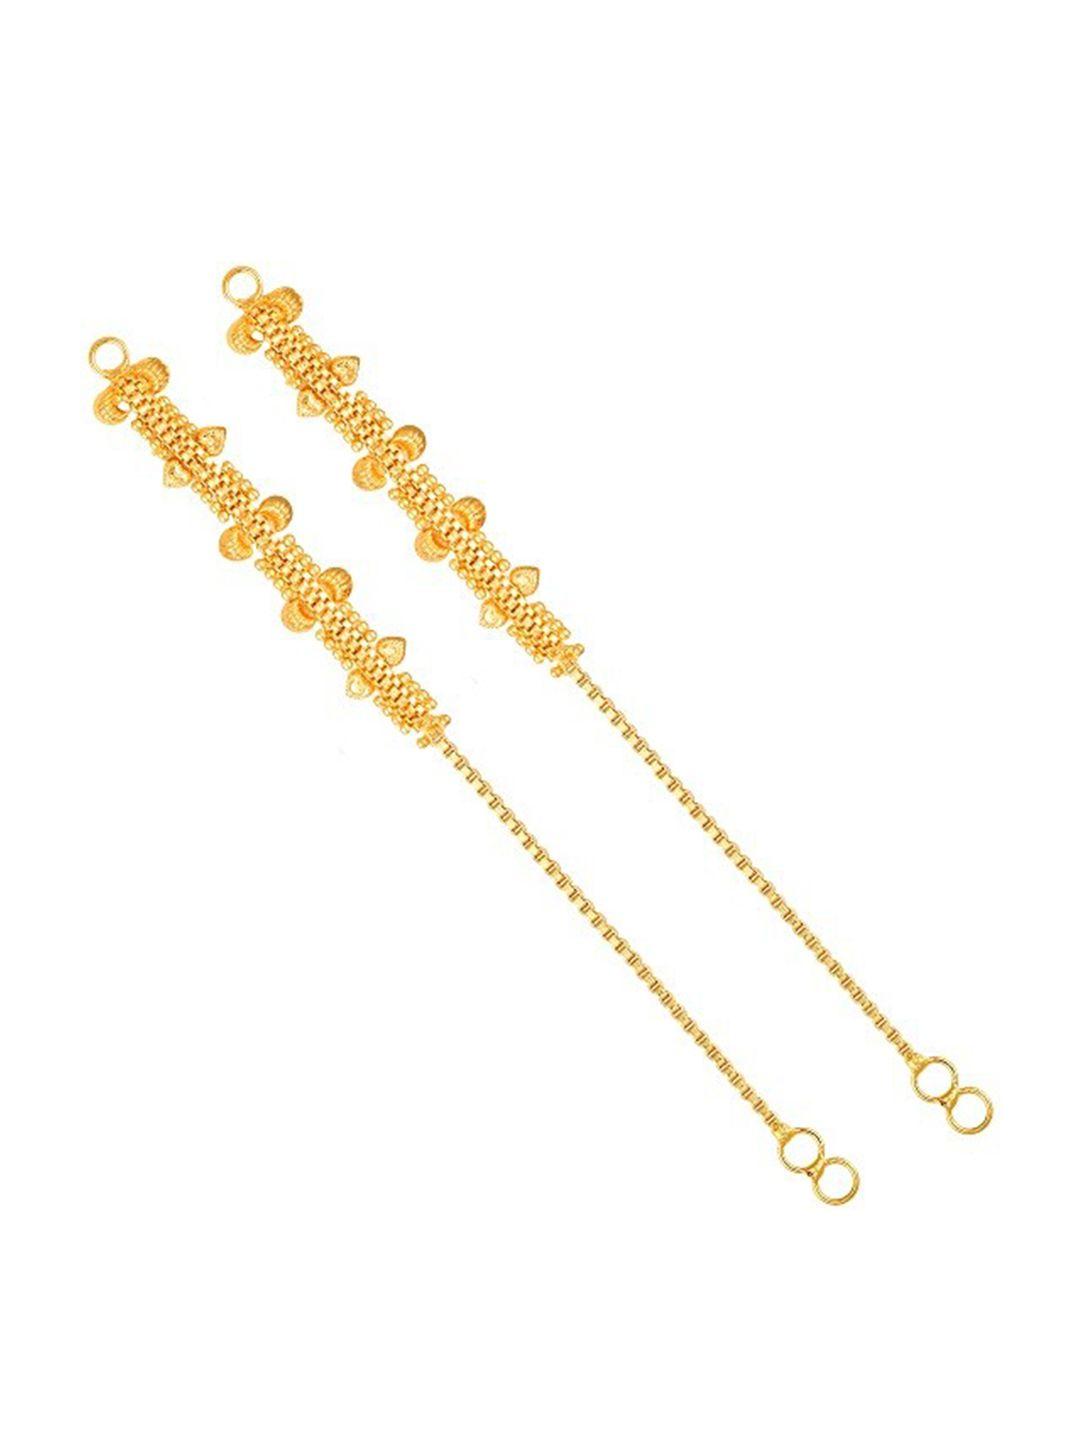 vighnaharta gold-plated floral ear cuff earrings